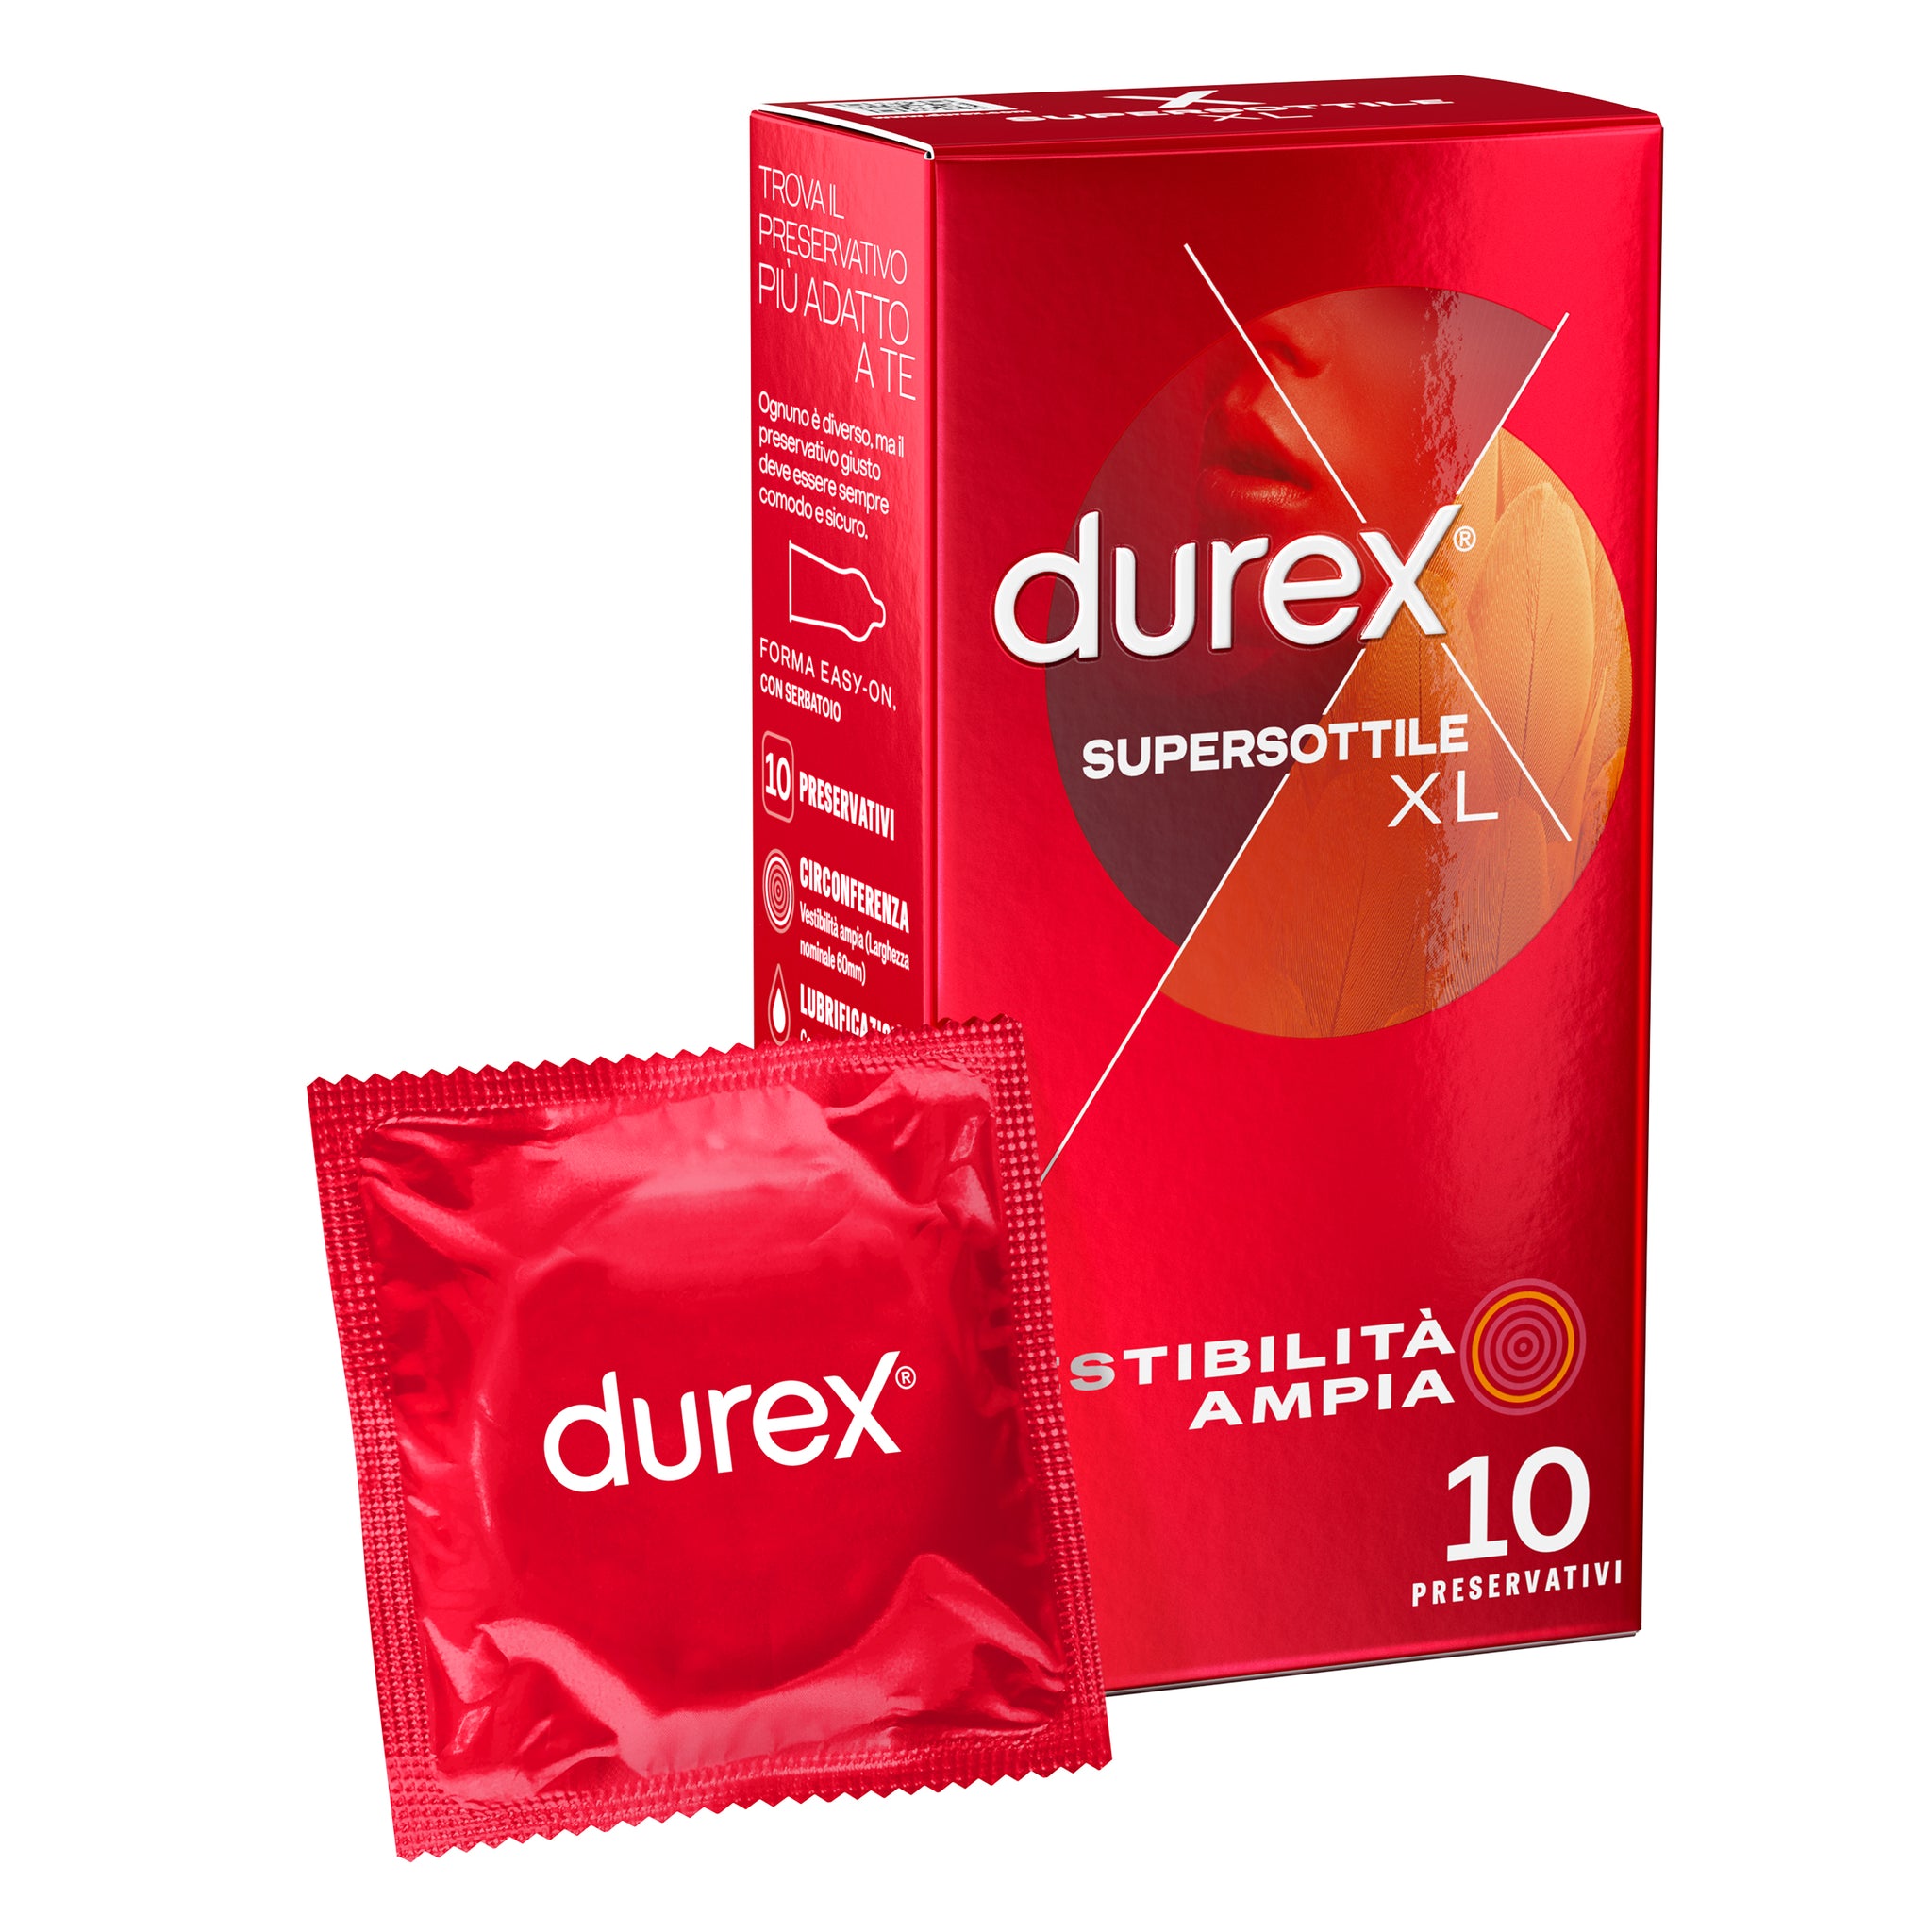 Durex Supersottile* XL, 10 Profilattici